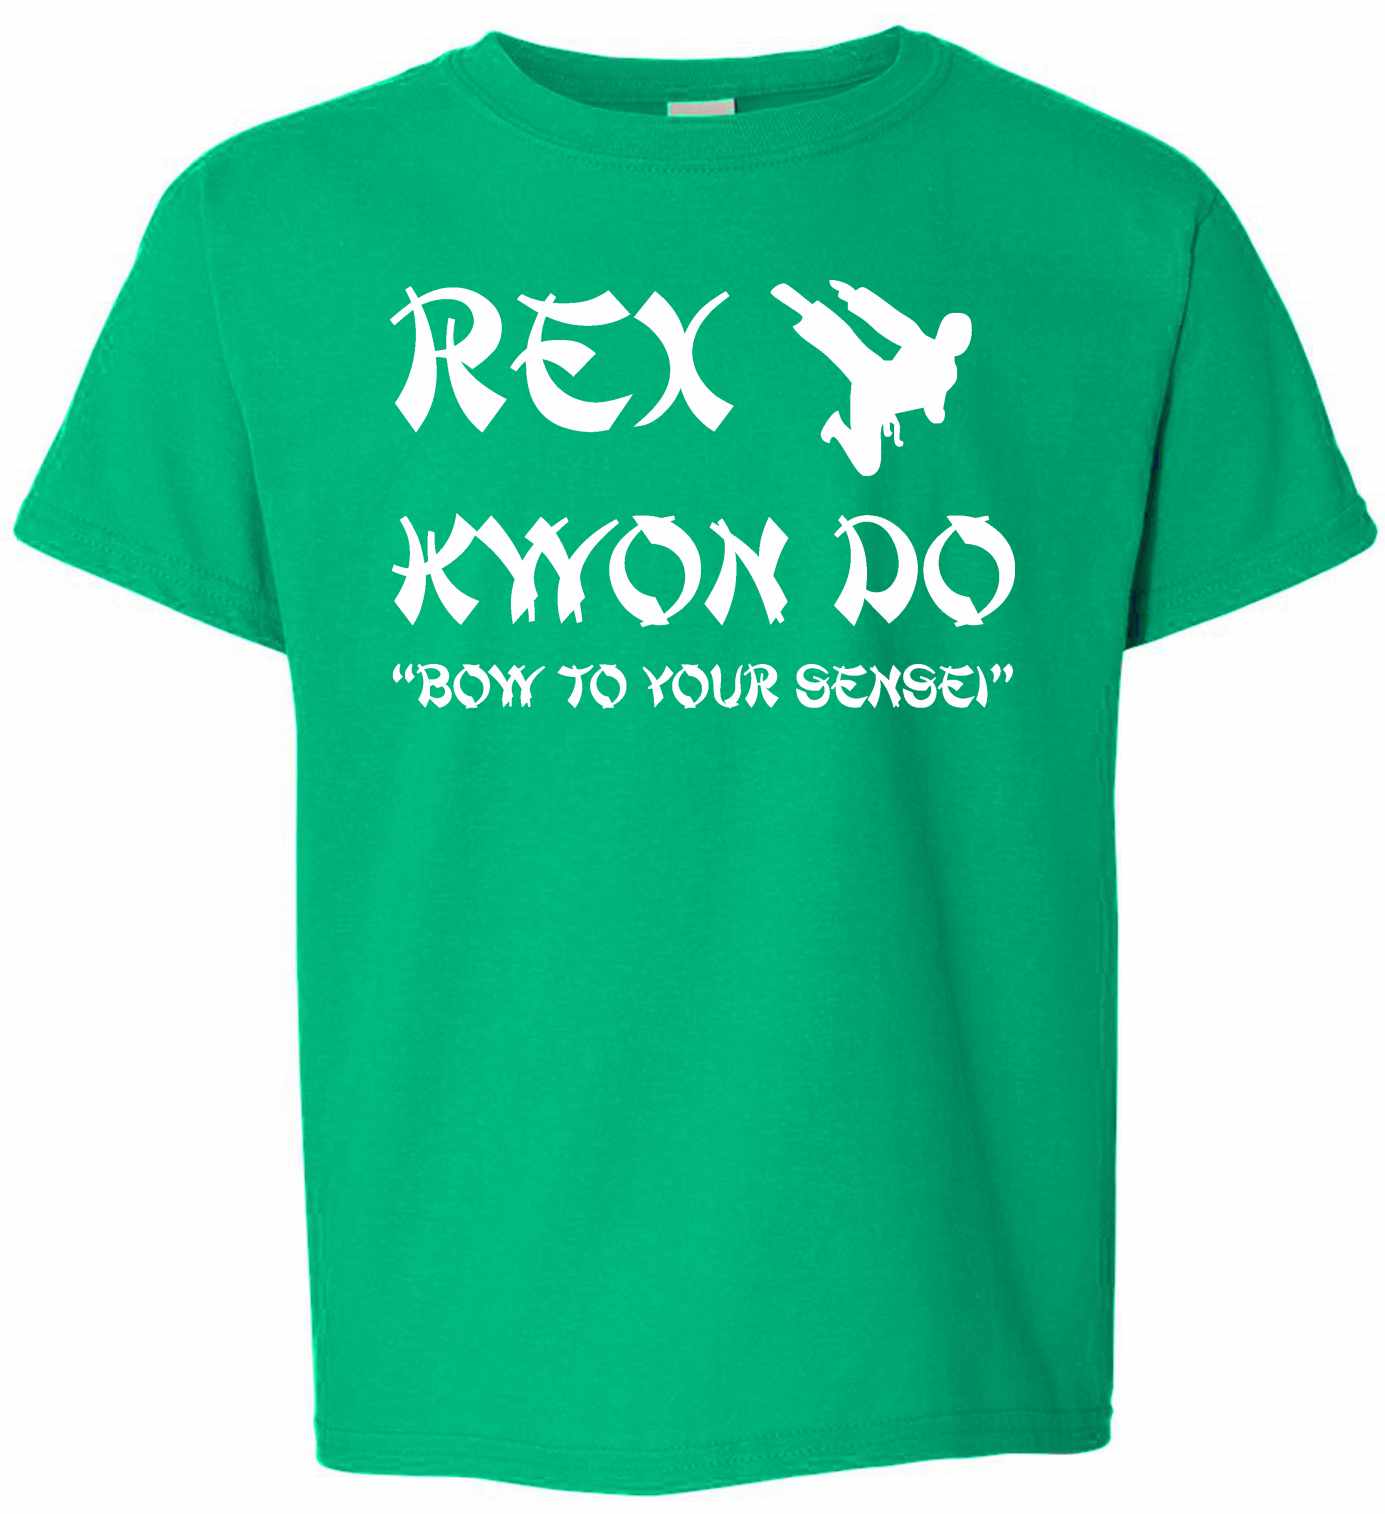 Rex Kwon Do Youth T-Shirt (#648-201)